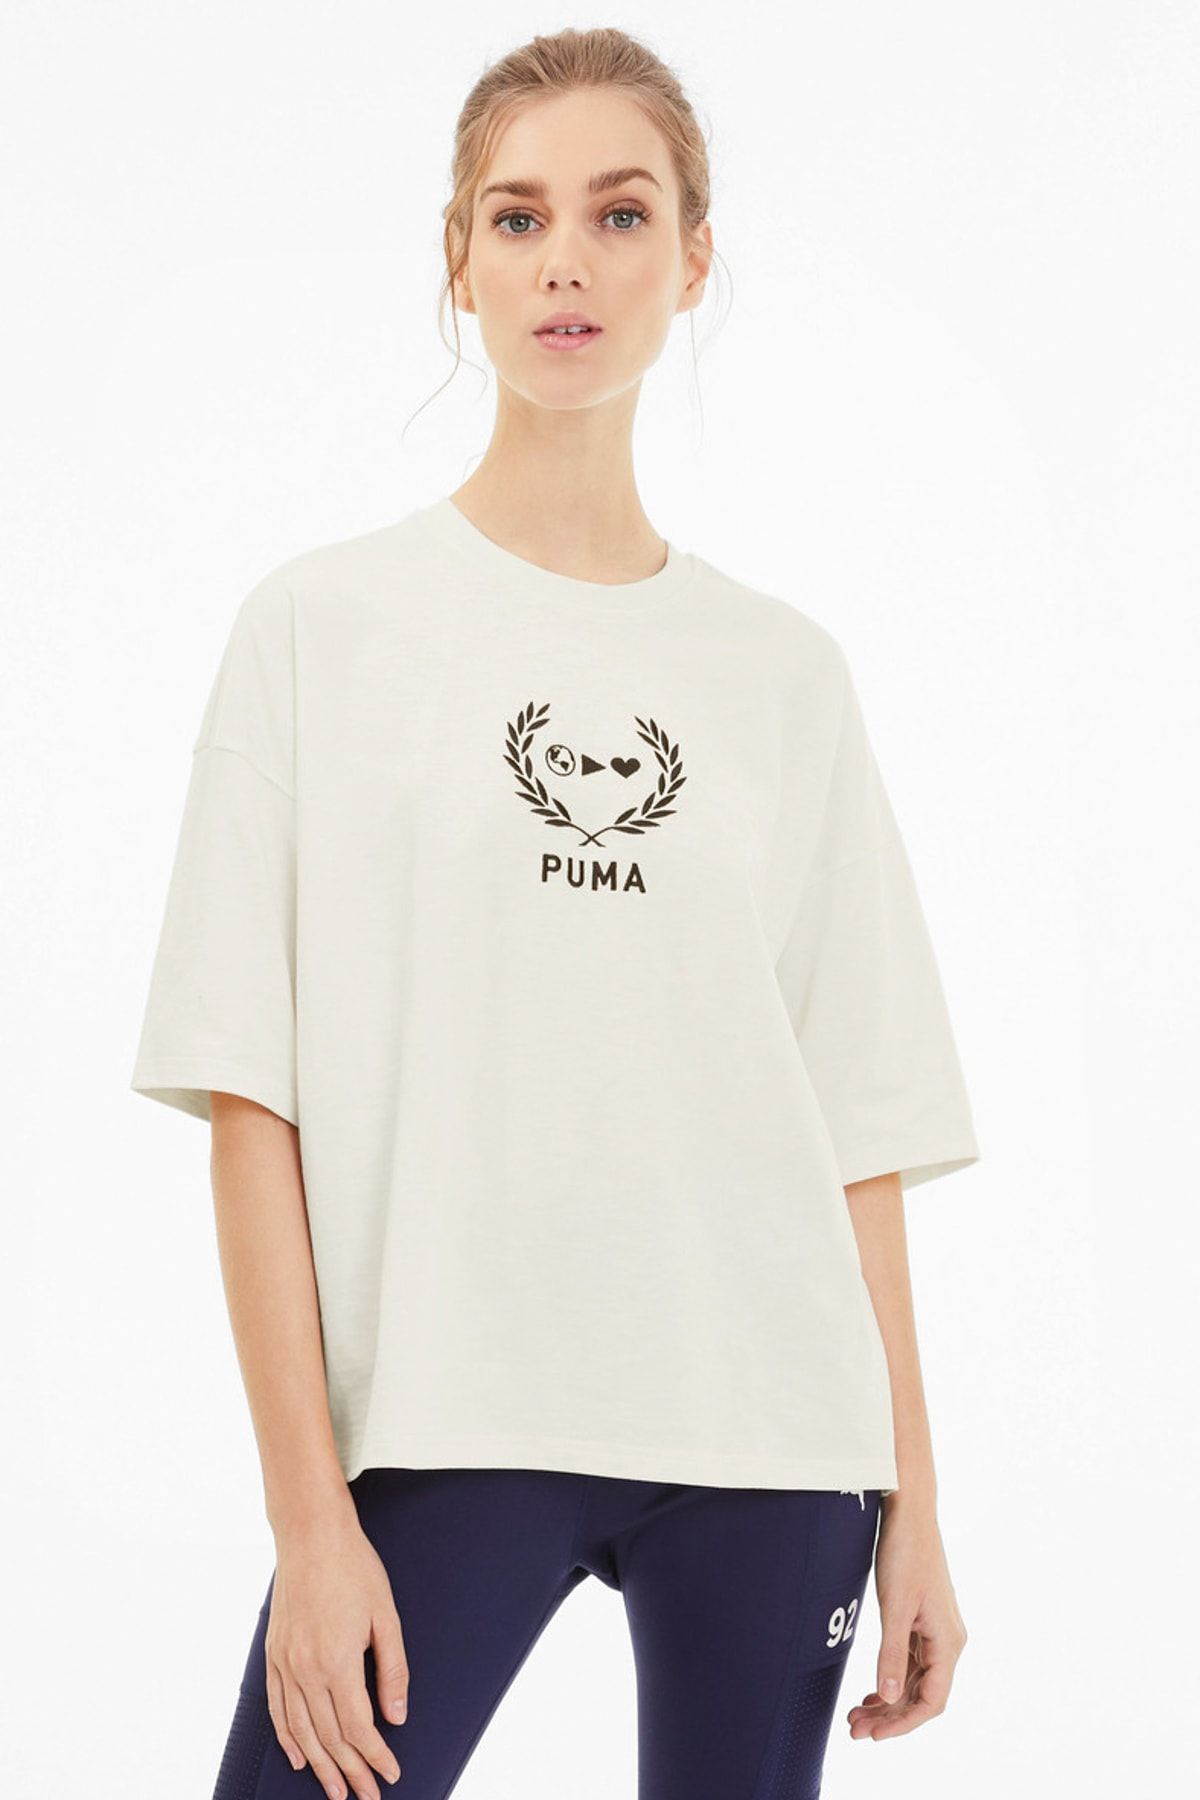 Puma x SELENA GOMEZ Bol Kesim Kadın T-Shirt